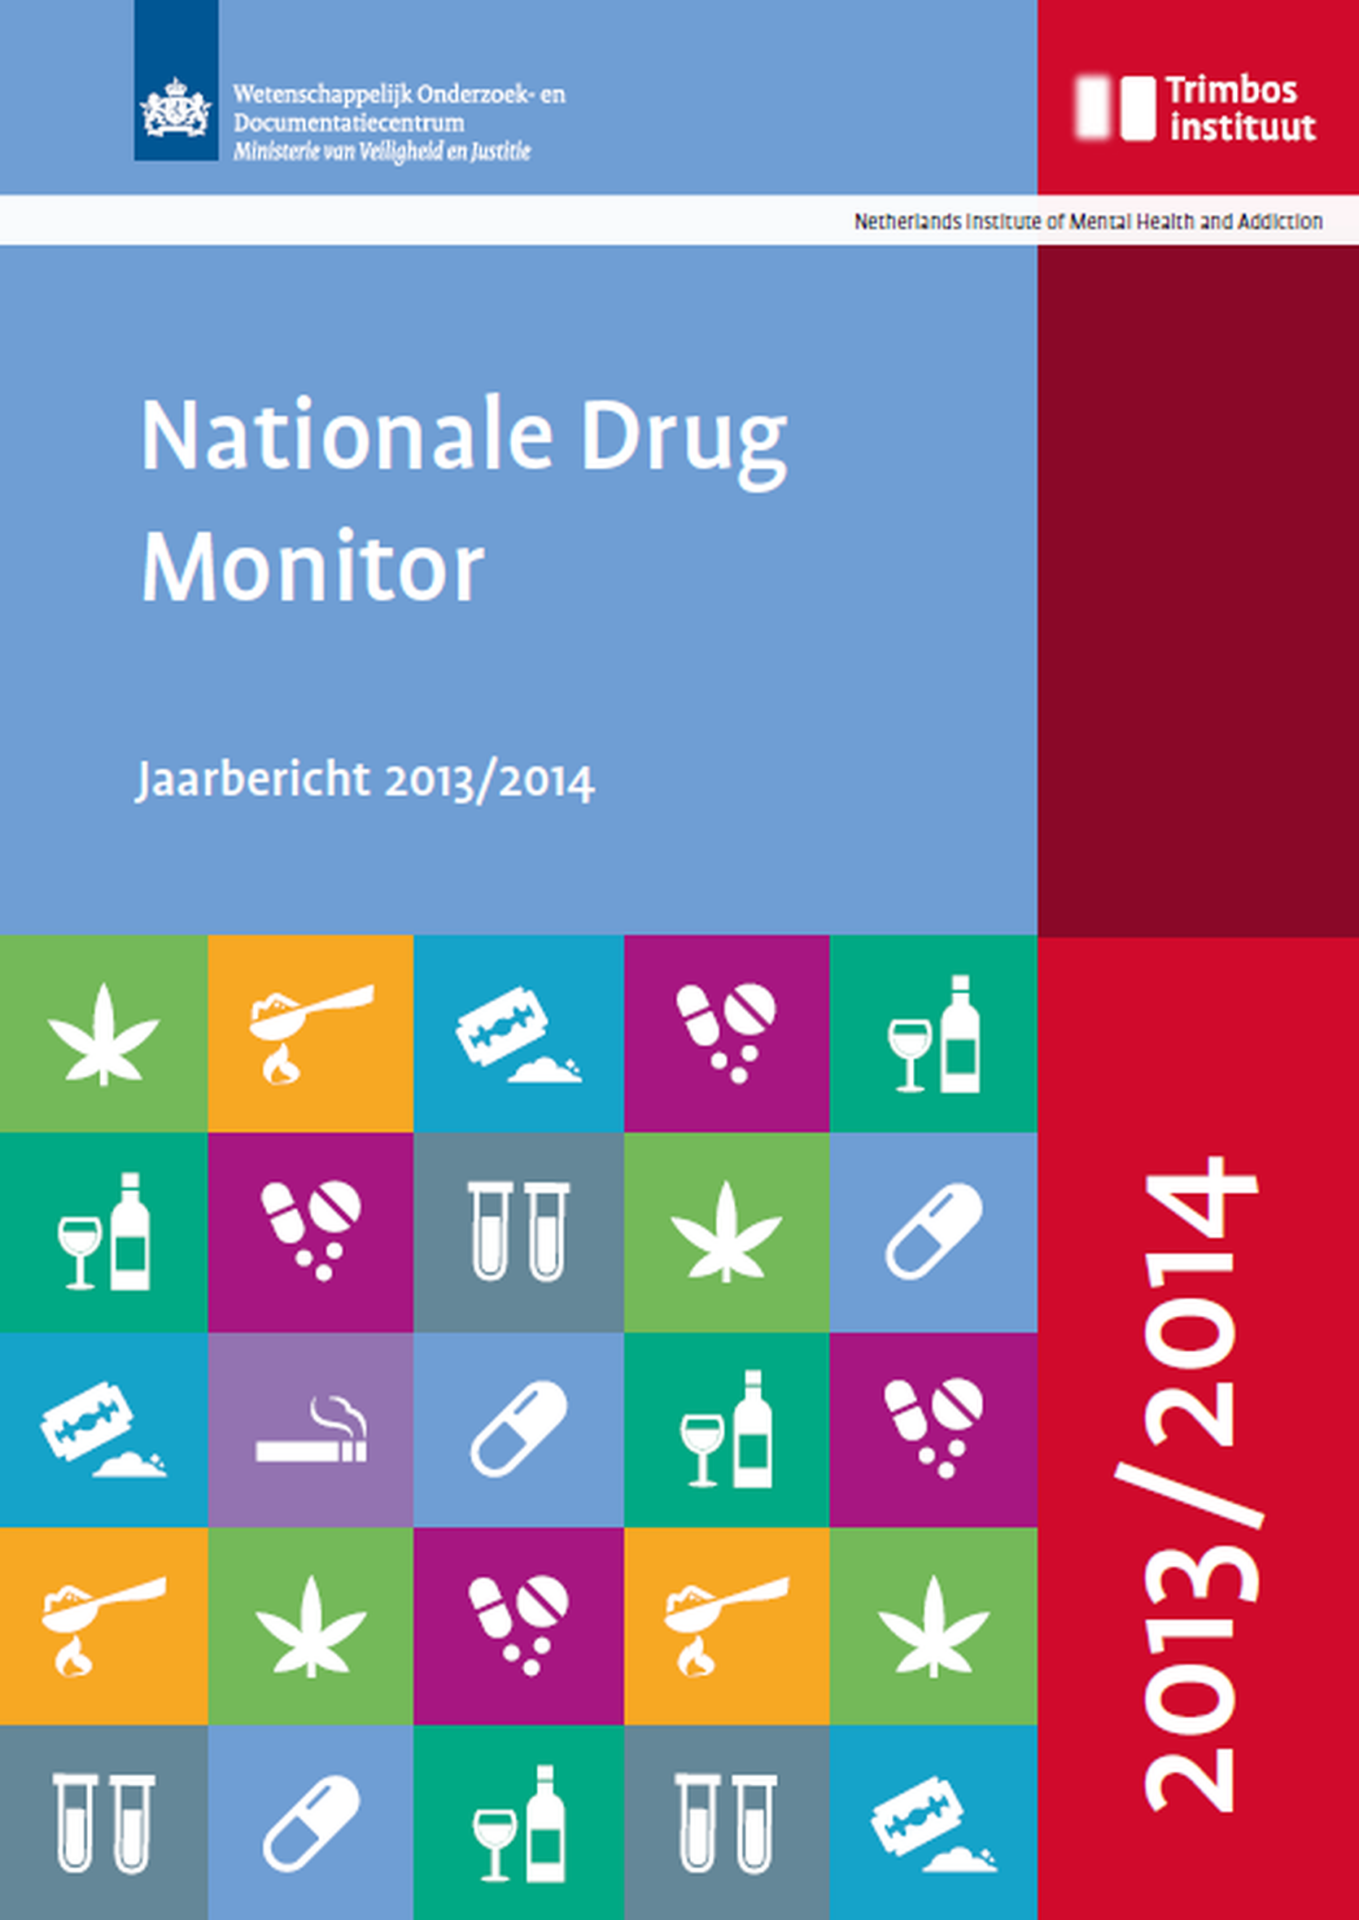 Jaarbericht Nationale Drug Monitor 2013/2014 verschenen